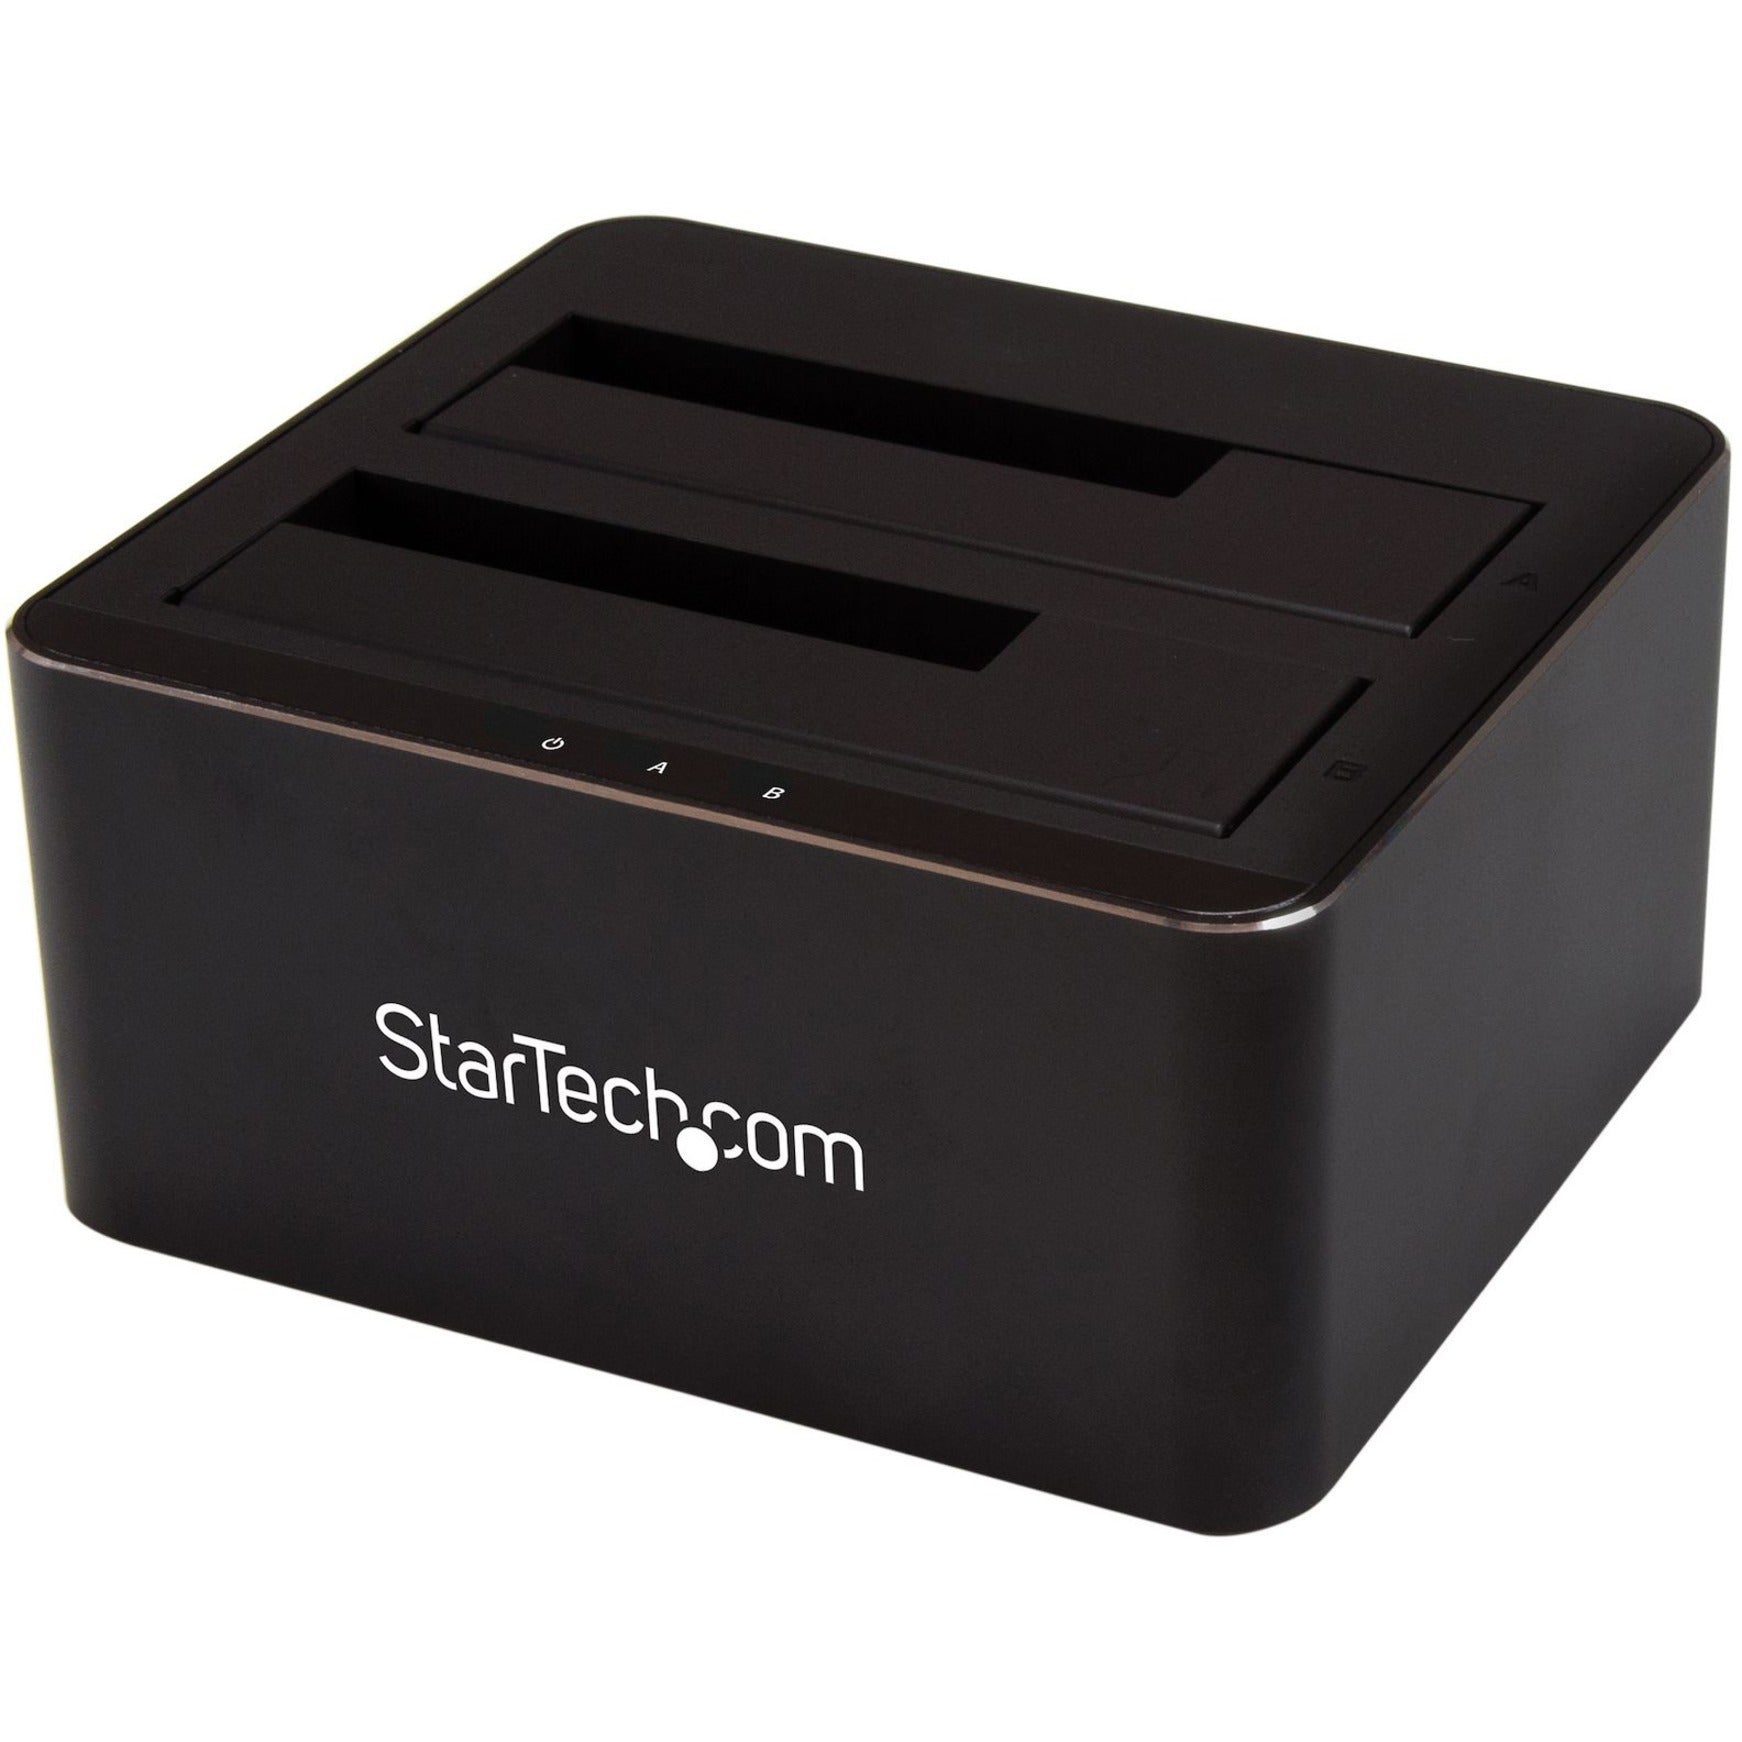 StarTech.com SDOCK2U33V Dual-Bay SATA HDD Docking Station for 2 x 2.5/3.5" SATA SSDs/HDDs - USB 3.0, Easy Data Transfer and Backup